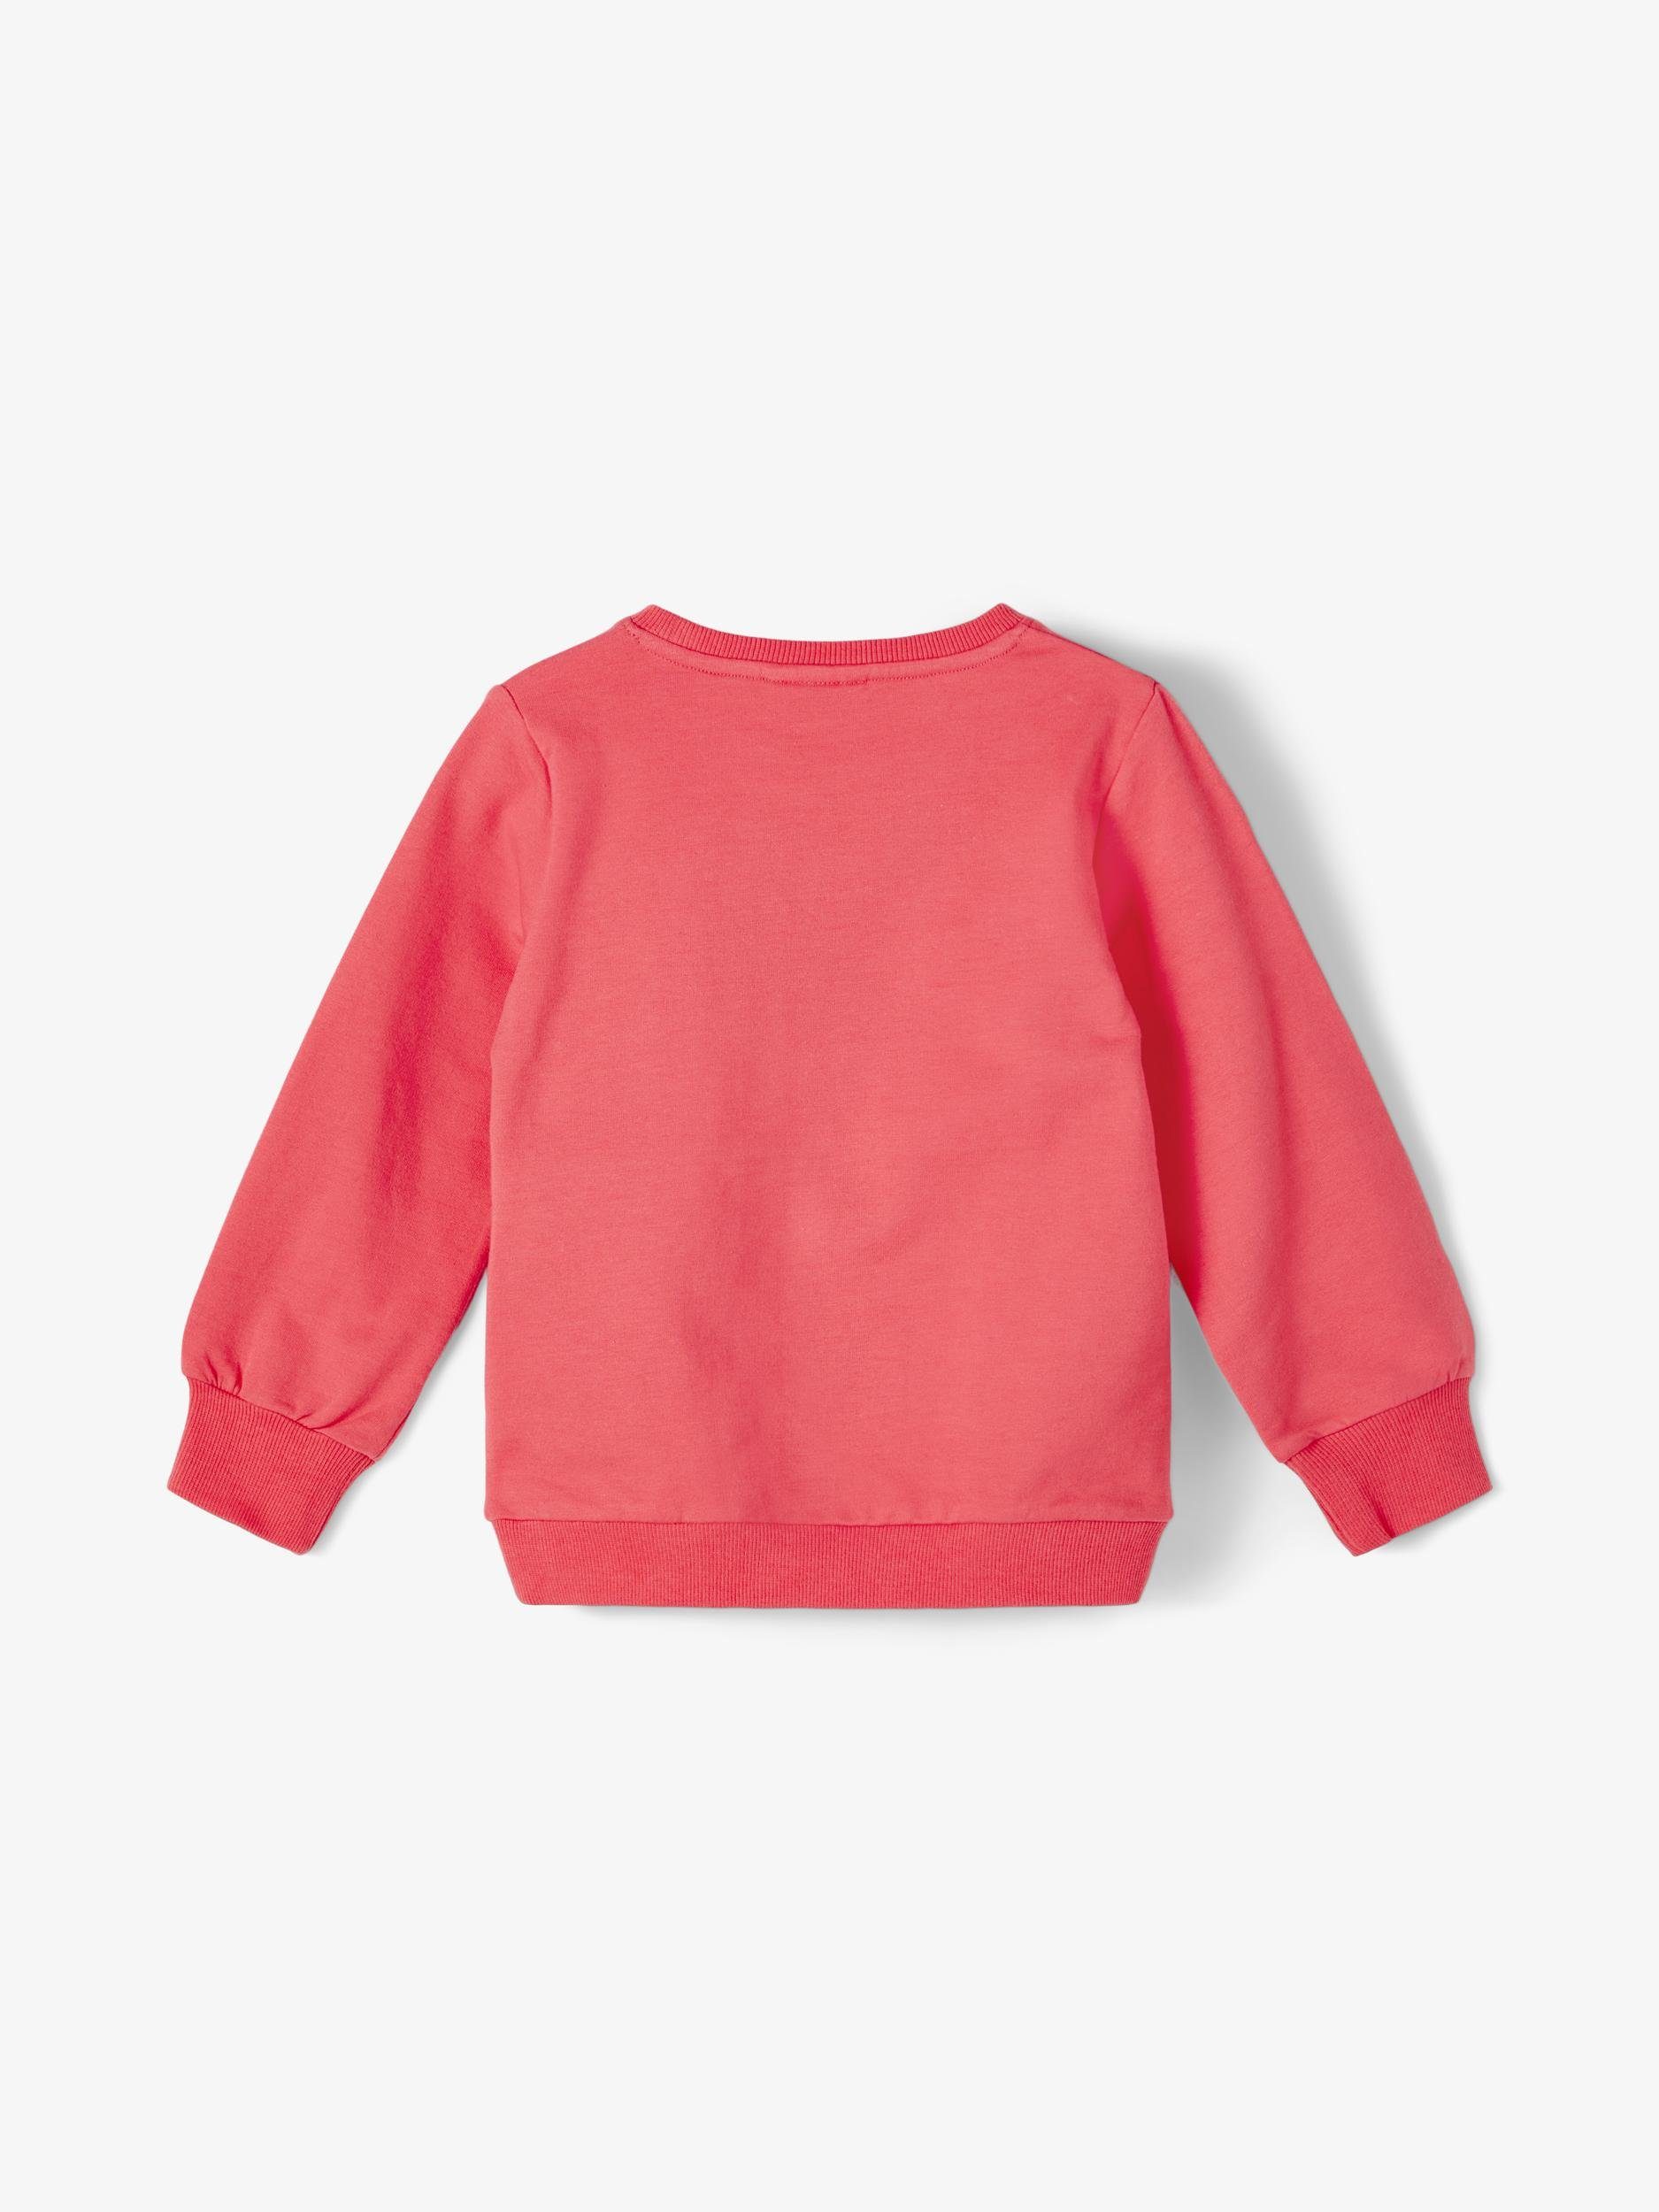 Sweater Sweatshirt langarm pink Name It Mädchen in It Name mit Print